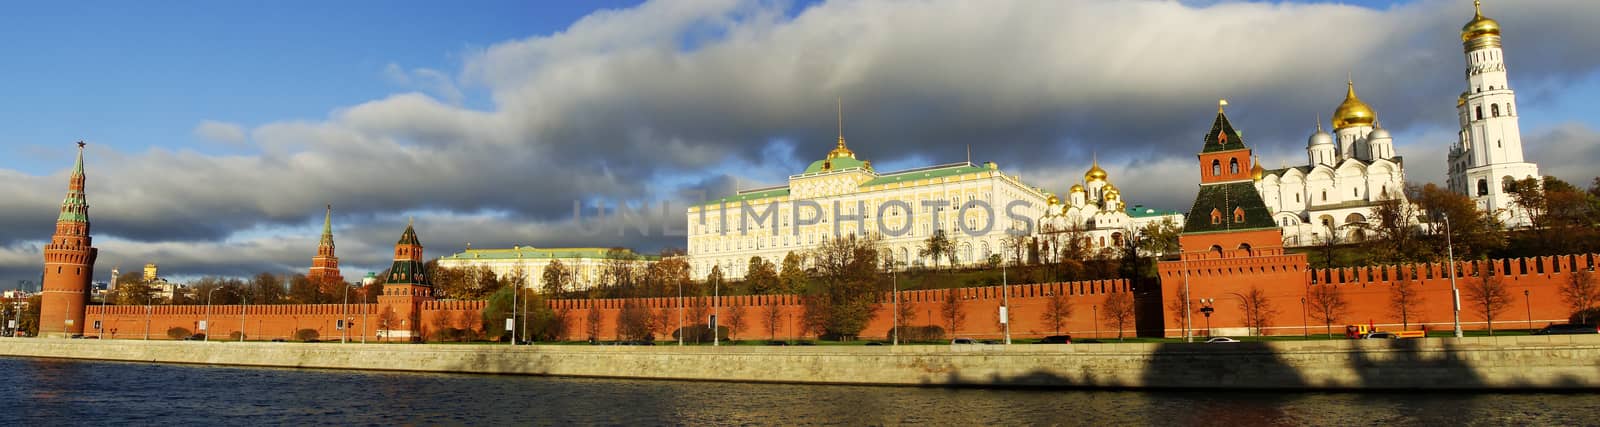 Moscow Kremlin panorama, Russia by donya_nedomam